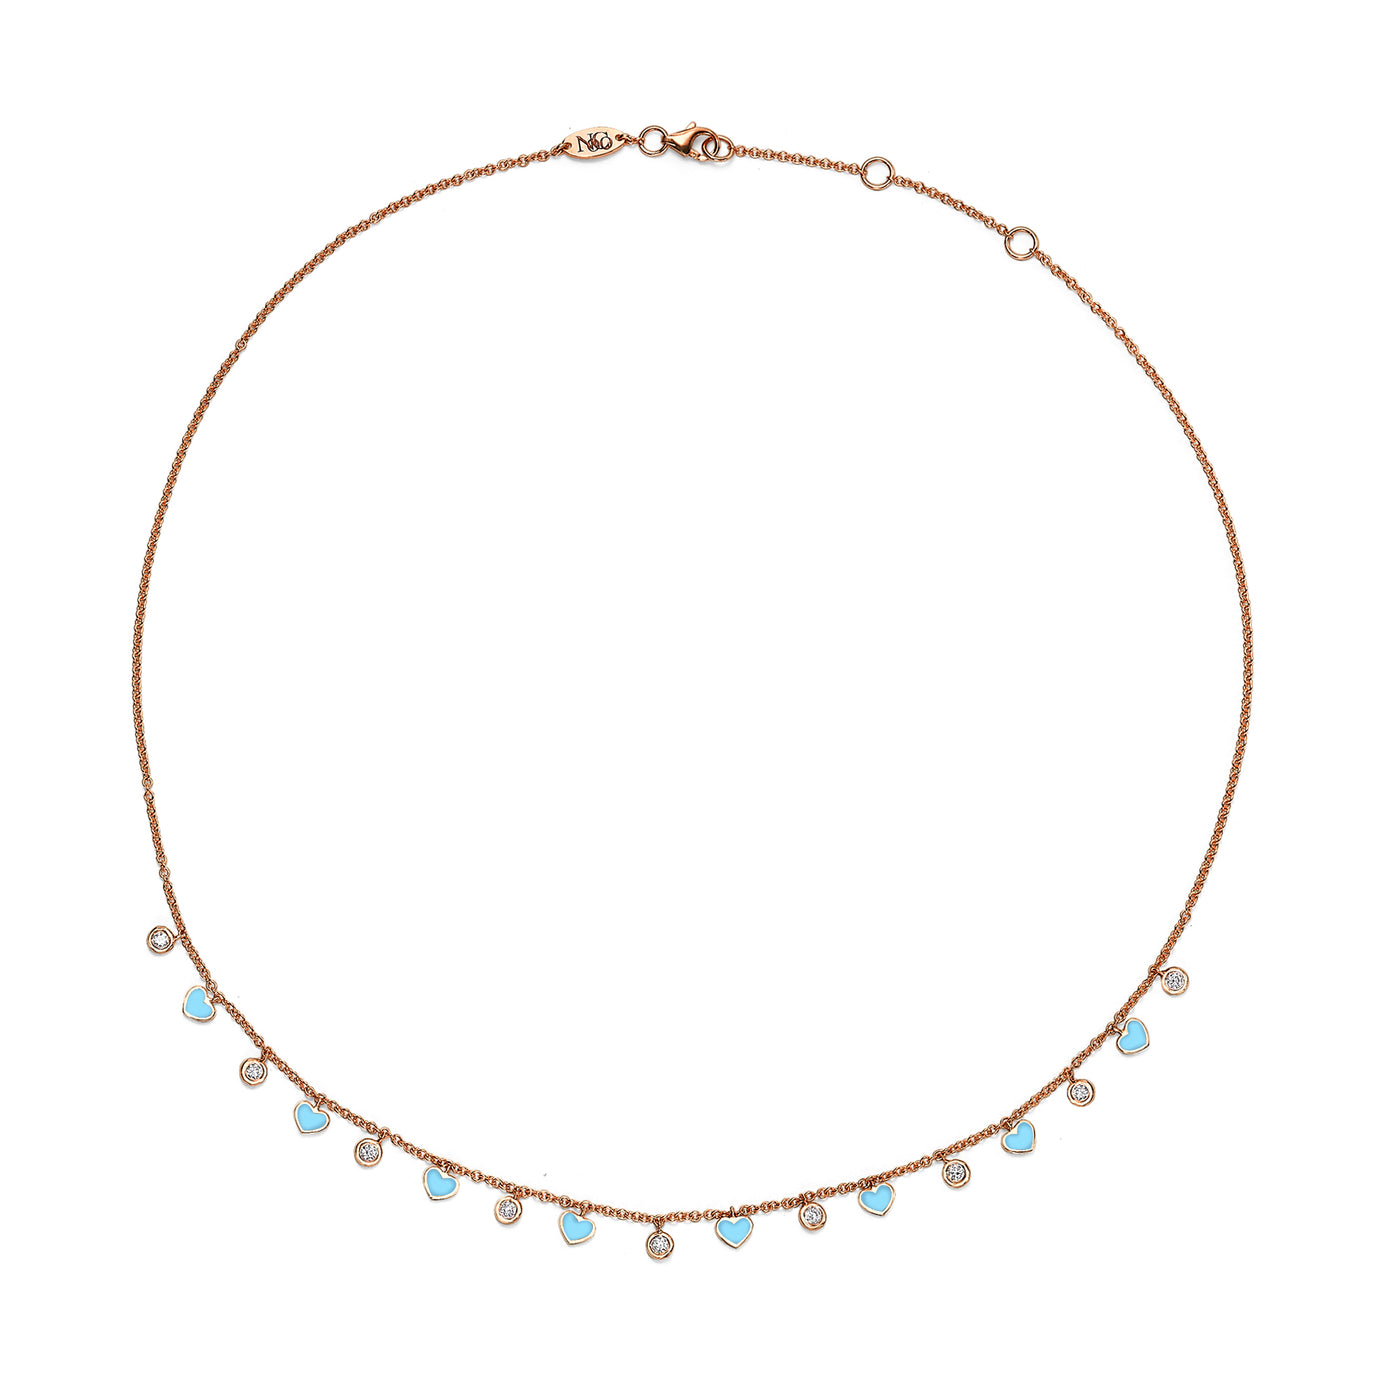 Luna diamonds hearts Necklace - Turquoise